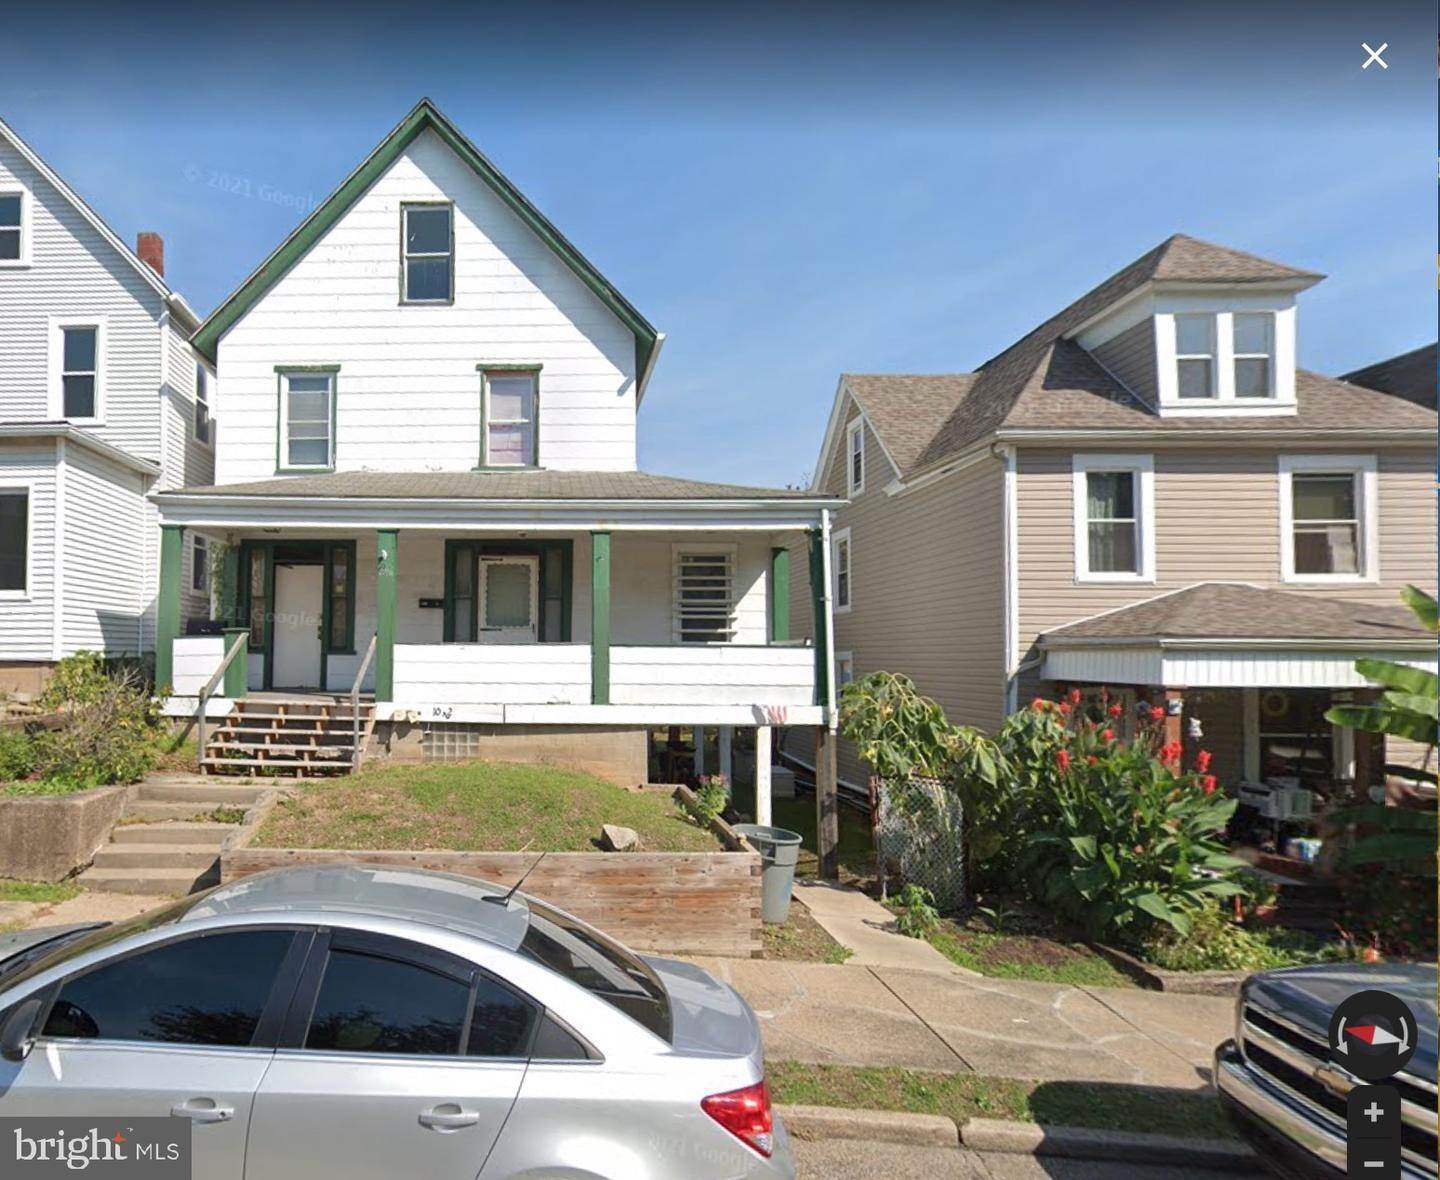 Single Family Homes για την Πώληση στο New Kensington, Πενσιλβανια 15068 Ηνωμένες Πολιτείες